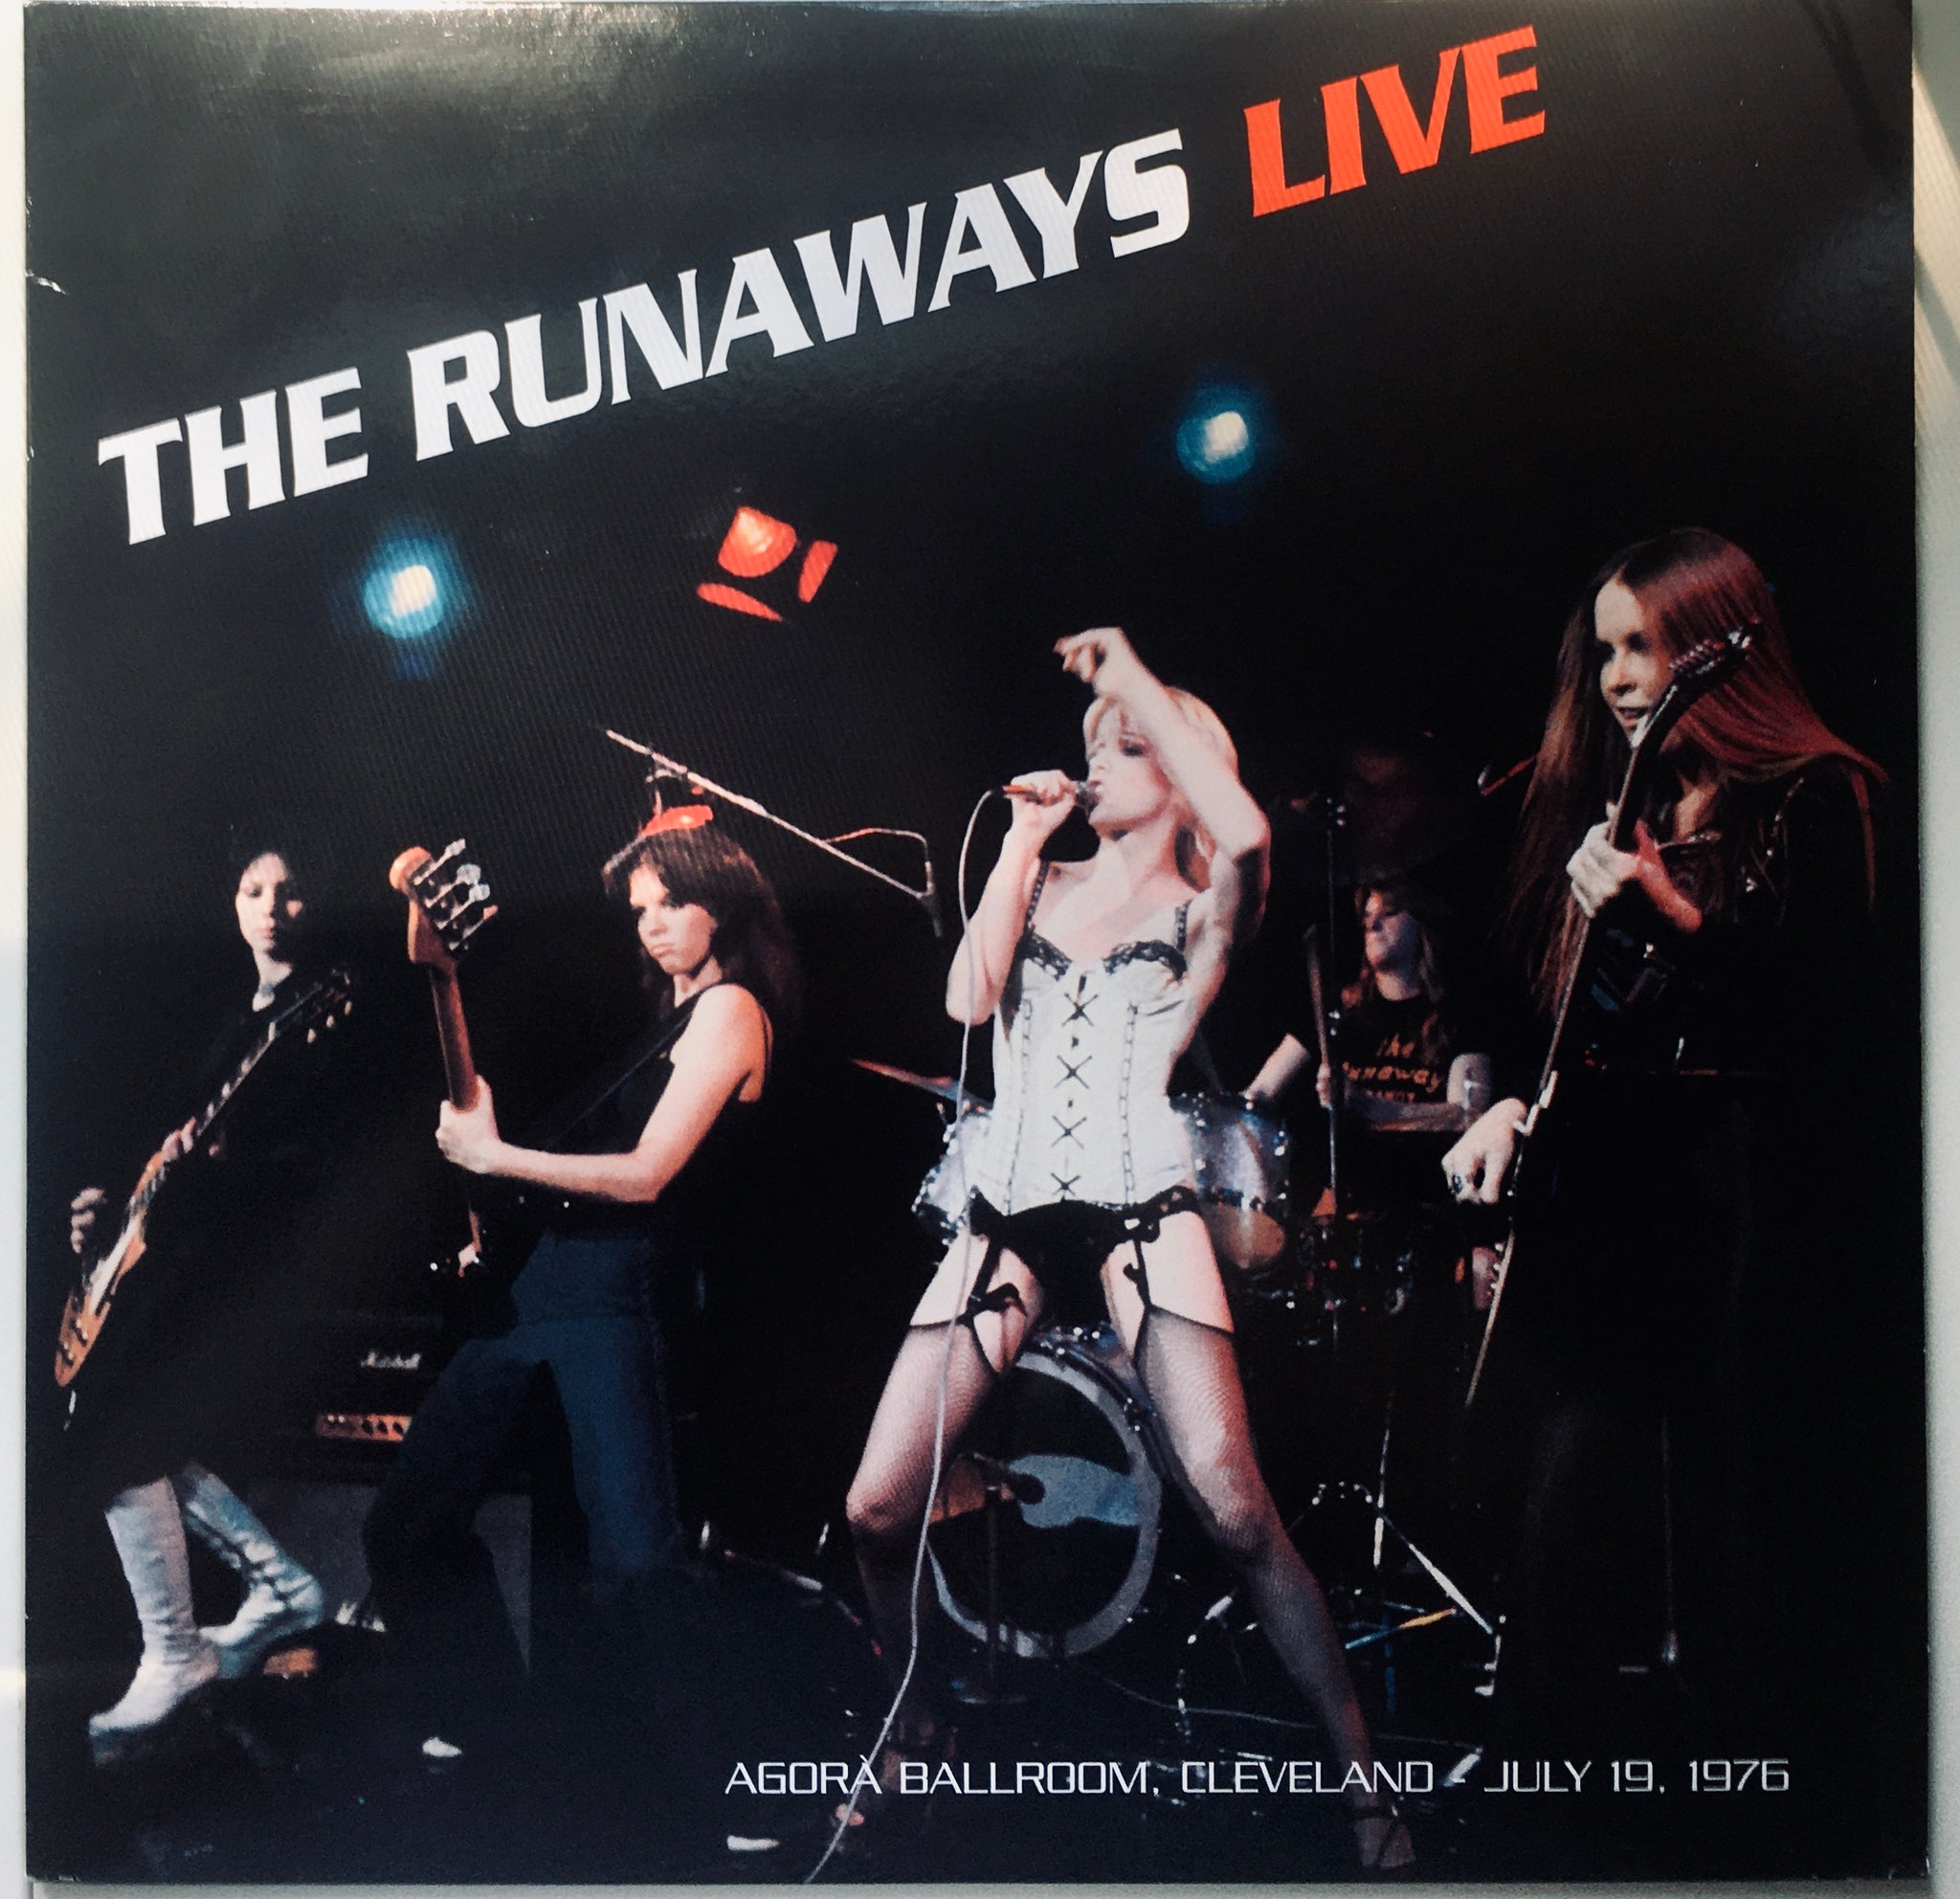 The Runaways "Live" LP (2015)